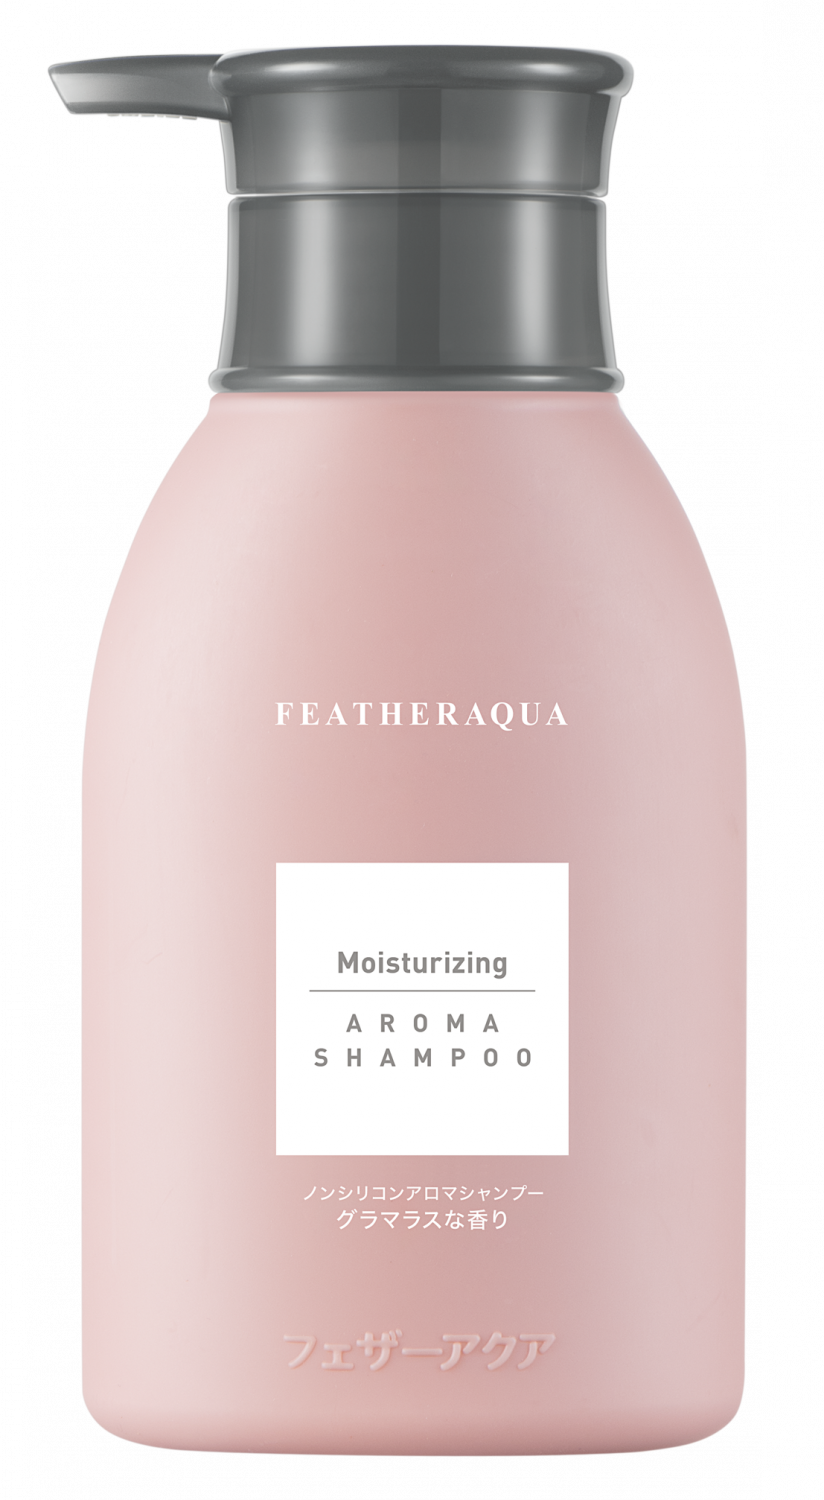 Featheraqua Moisturizing Aroma Shampoo J3 280ml - интернет-магазин профессиональной косметики Spadream, изображение 41779